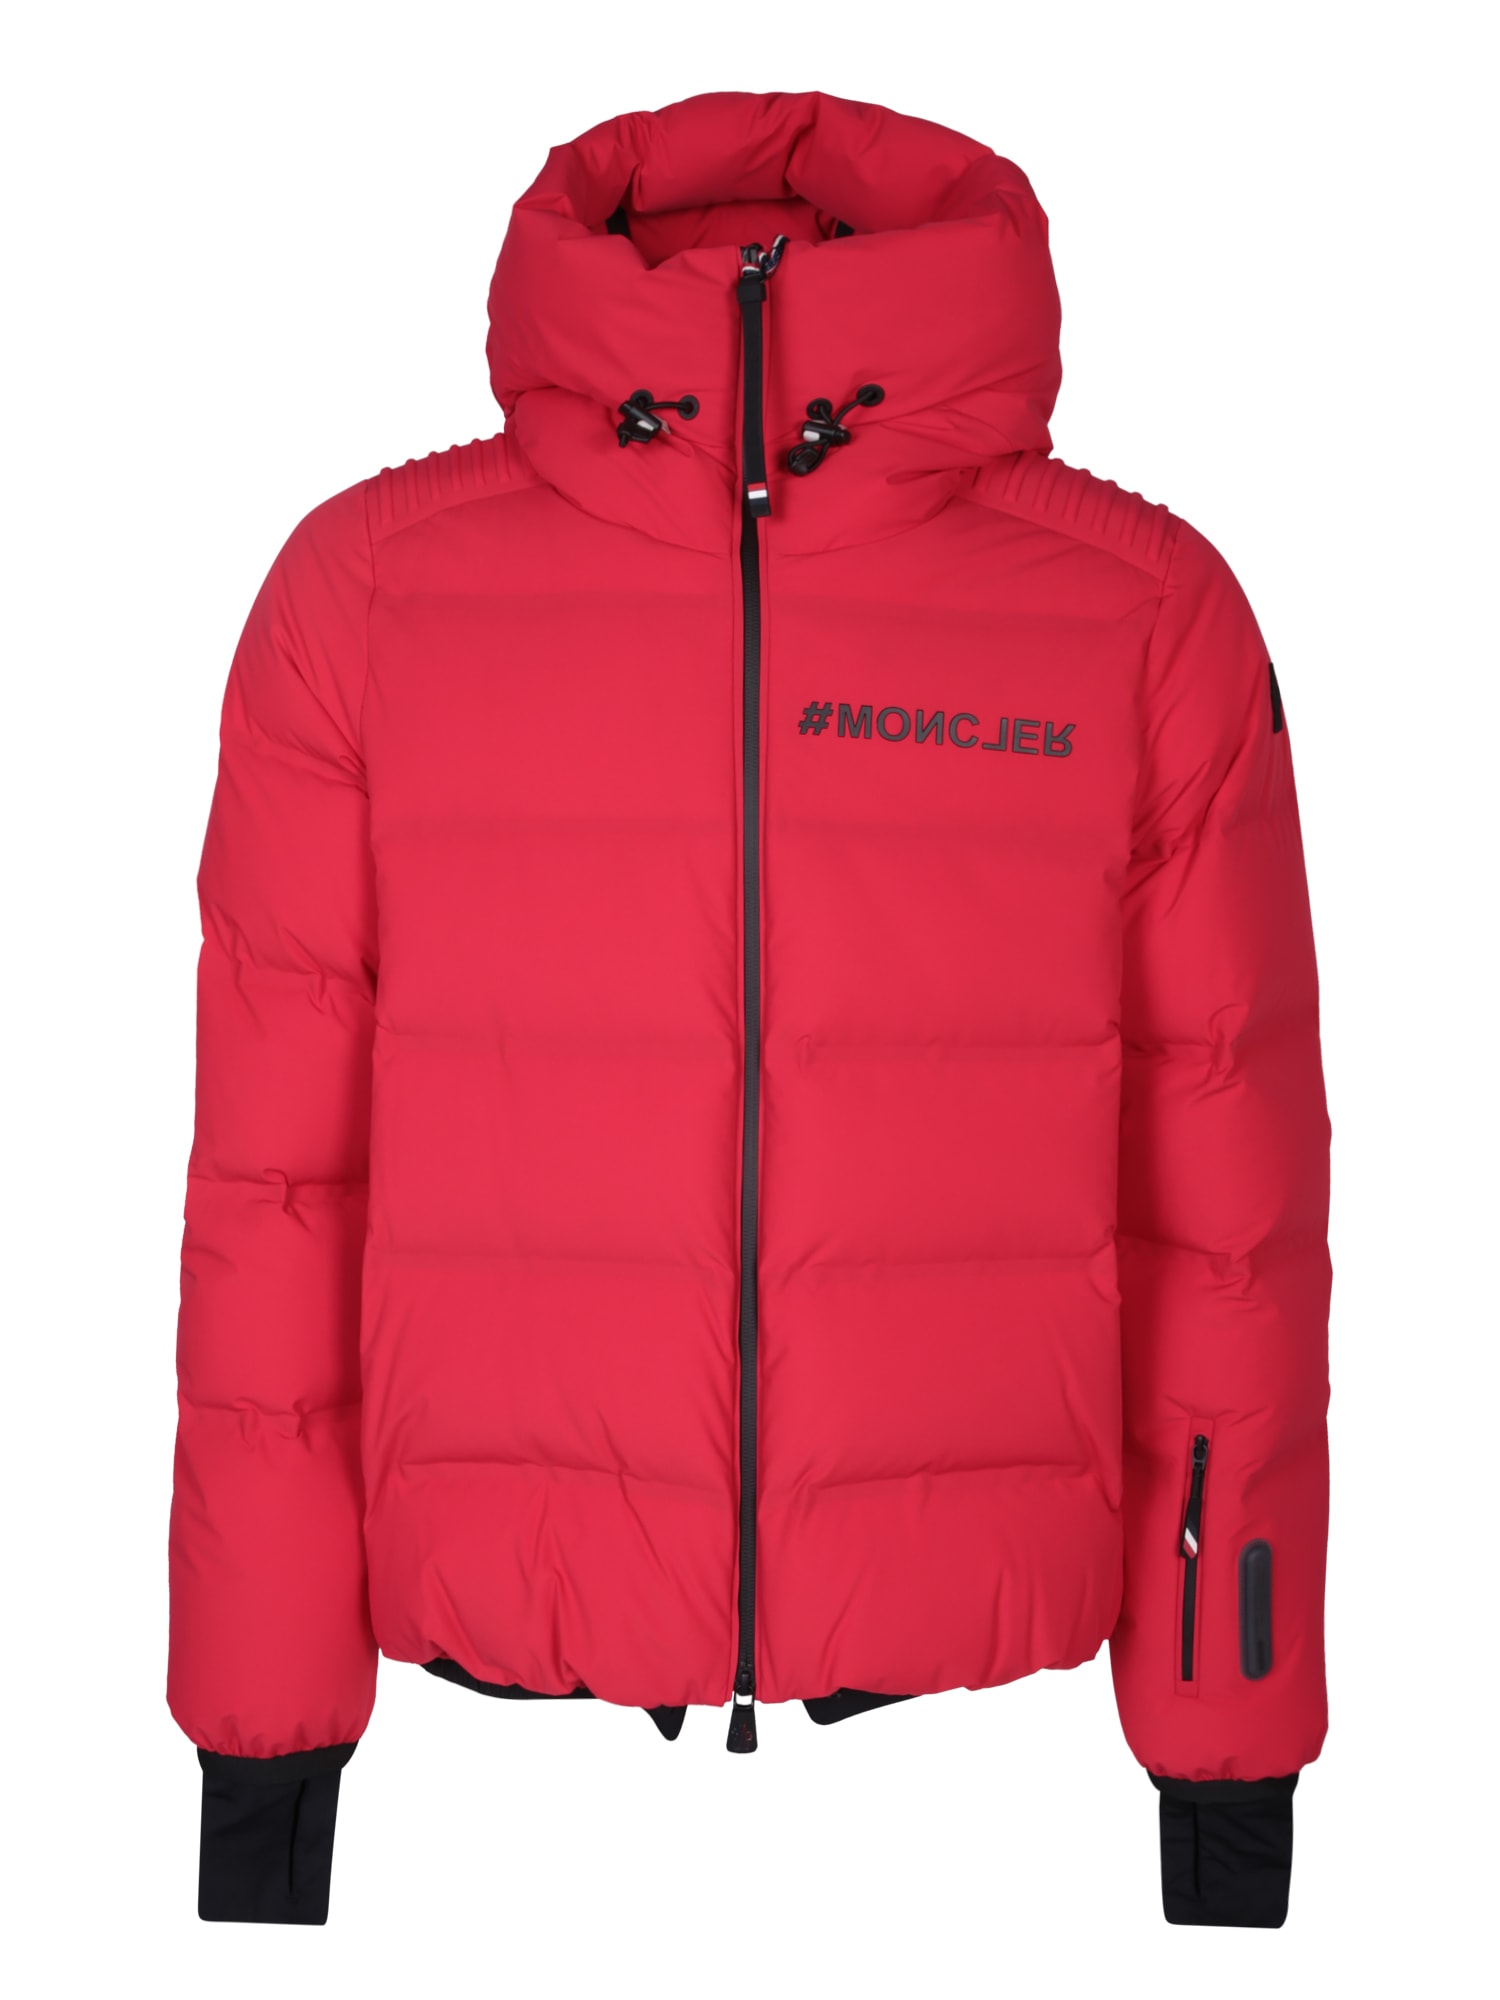 Shop Moncler Suisses Red Down Jacket